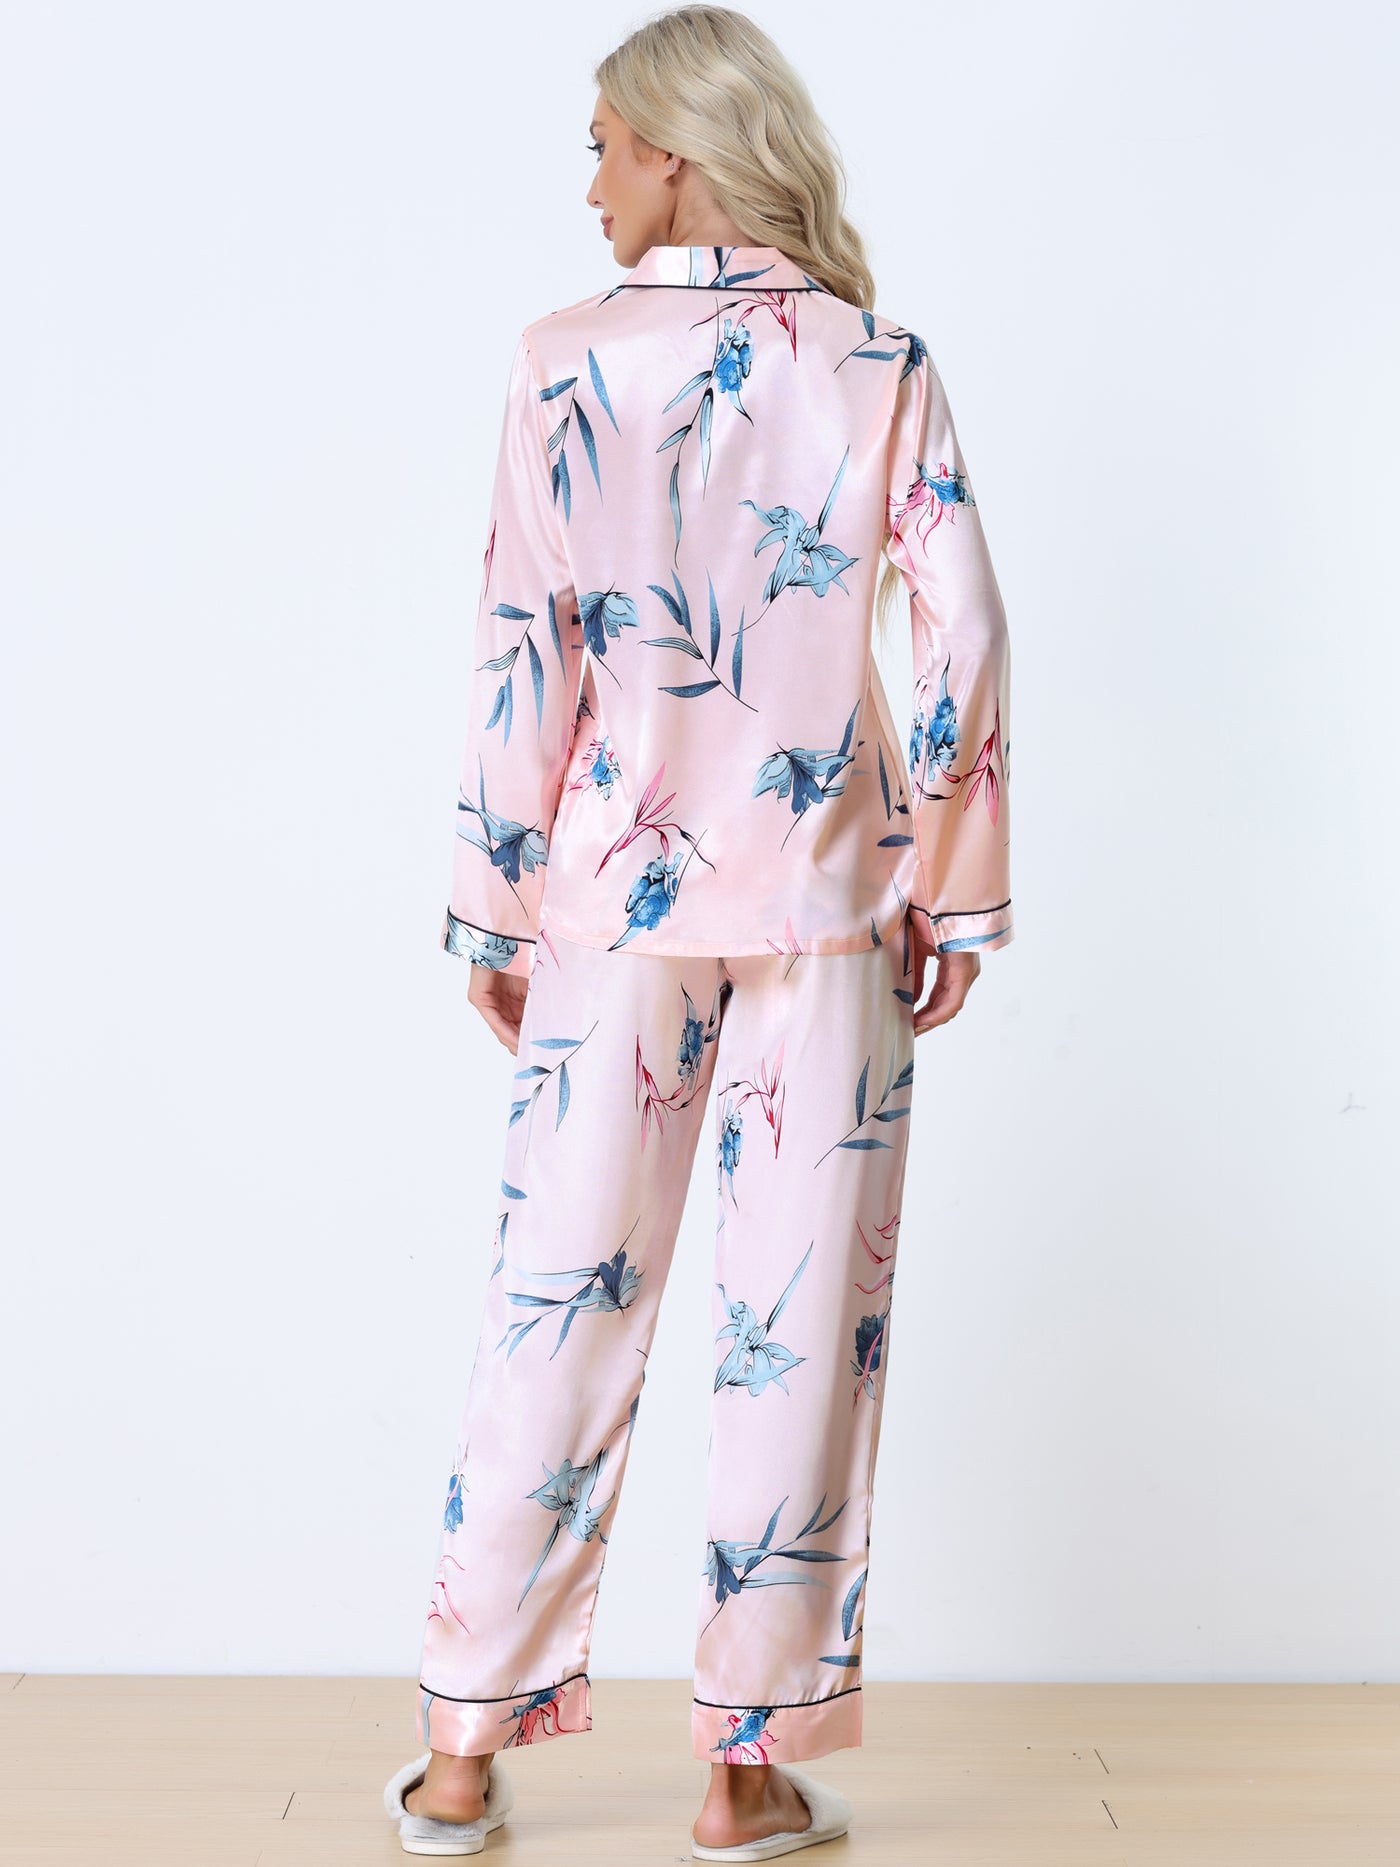 Bublédon Women's Pajama Set Soft Satin Silky Floral Printed Button Down Shirt and Pants Sleepwear 2pcs